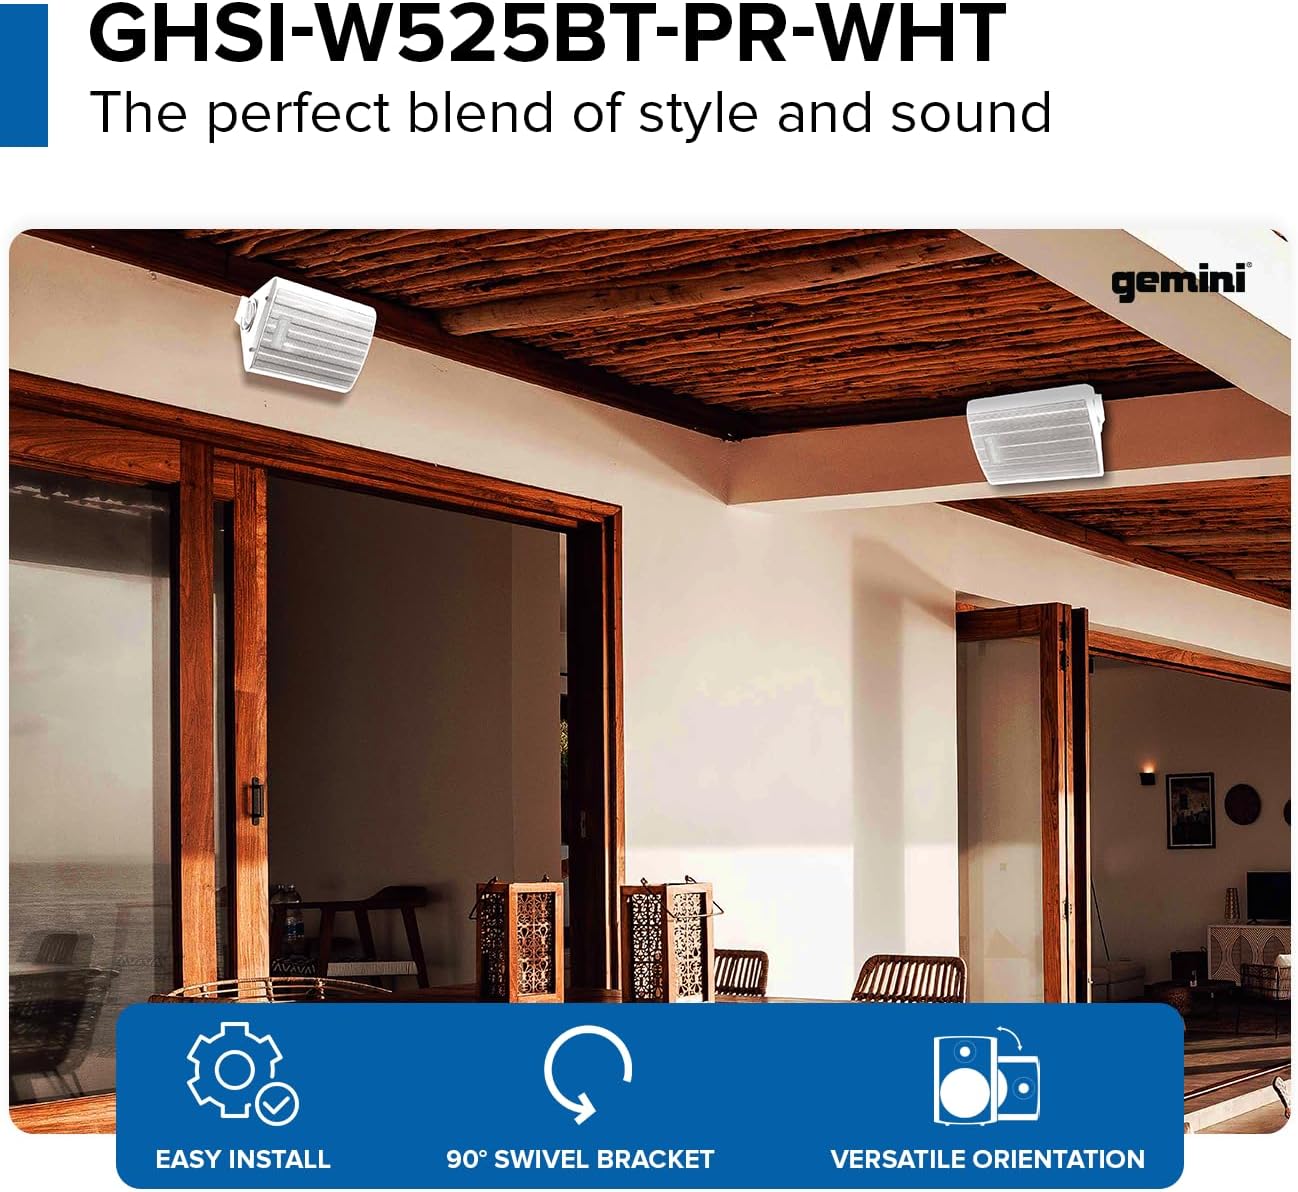 Gemini Sound GHSI-W525BT-PR-WHT Outdoor Wall Mount Speakers